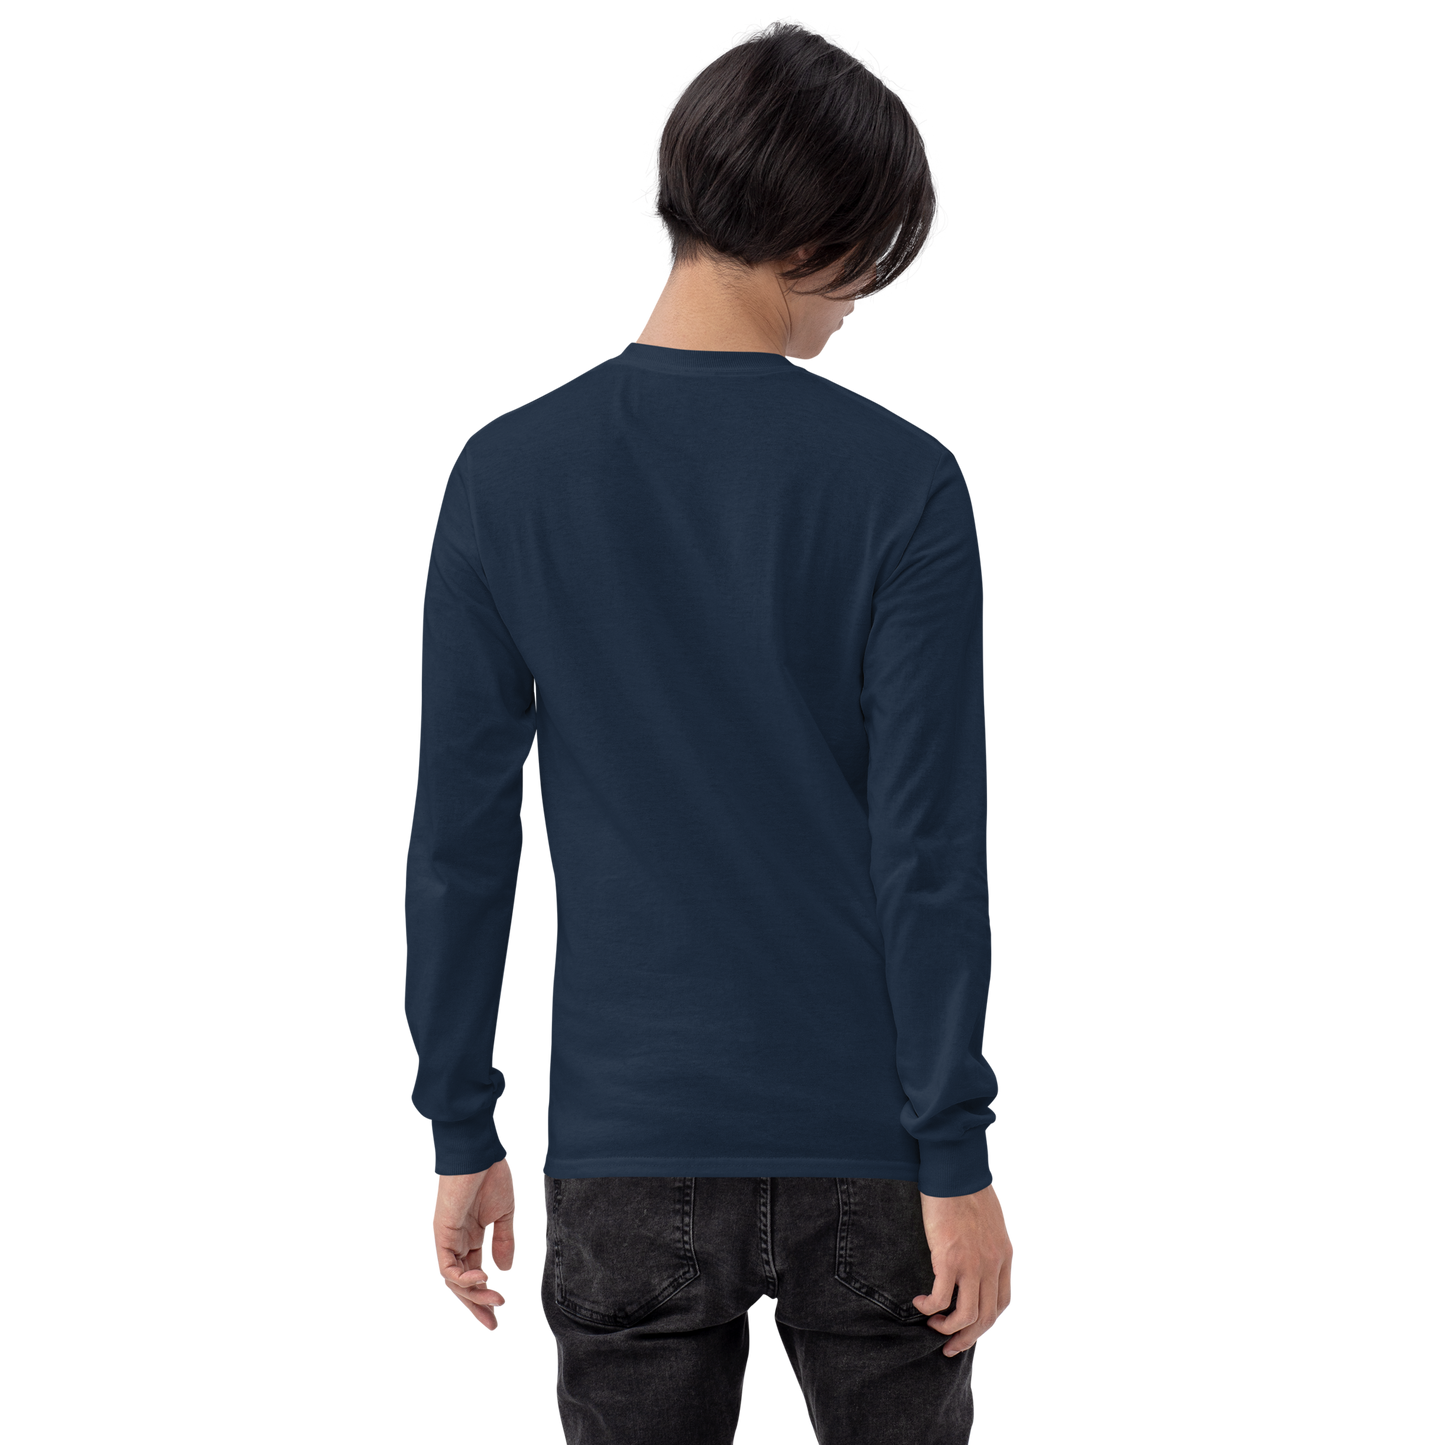 Long Sleeve Shirt - Discreet V1.0 - Black/ Navy - Premium